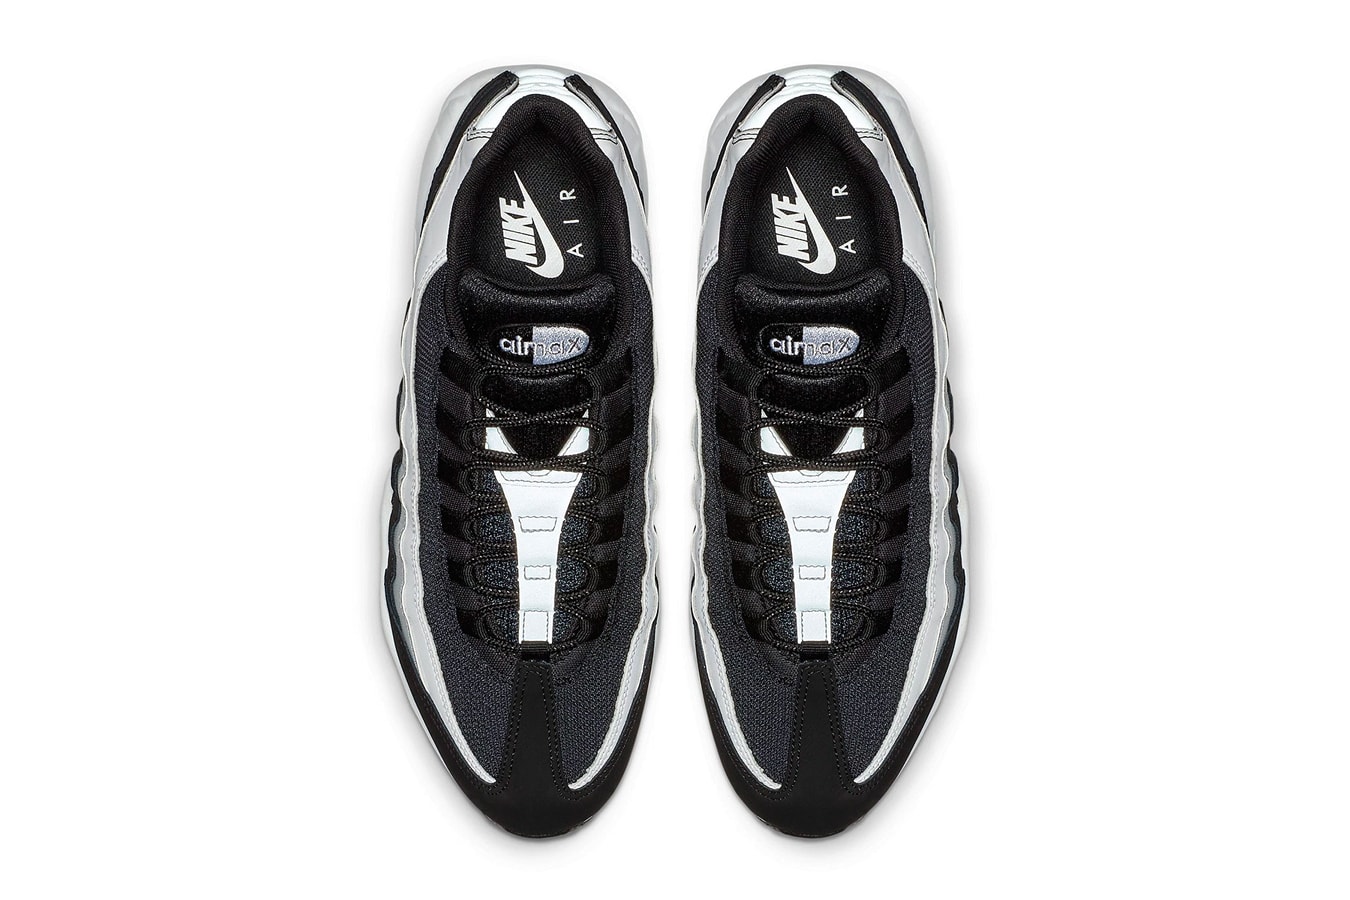 Nike Air Max 95 全新「Black/Wolf Grey/White」配色即將上架